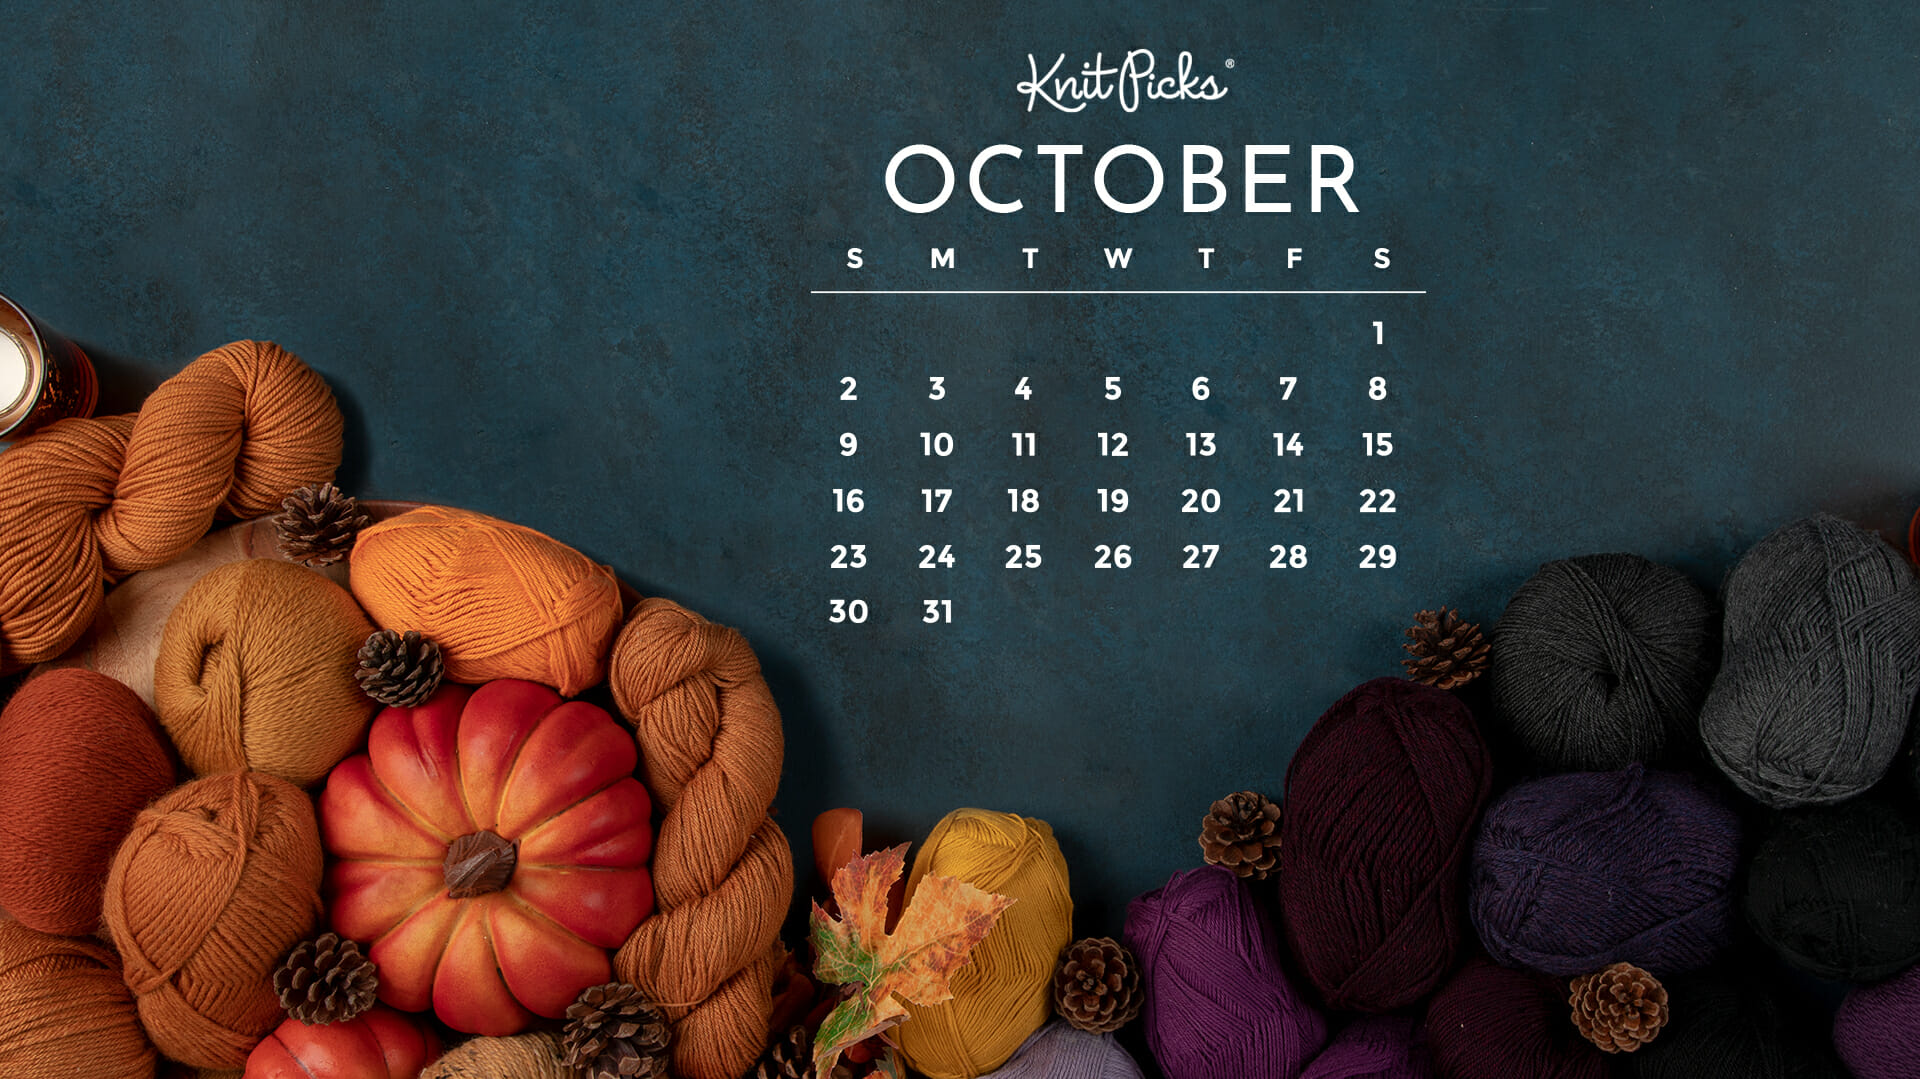 Free Downloadable October 2022 Calendar The Knit Picks Staff Knitting